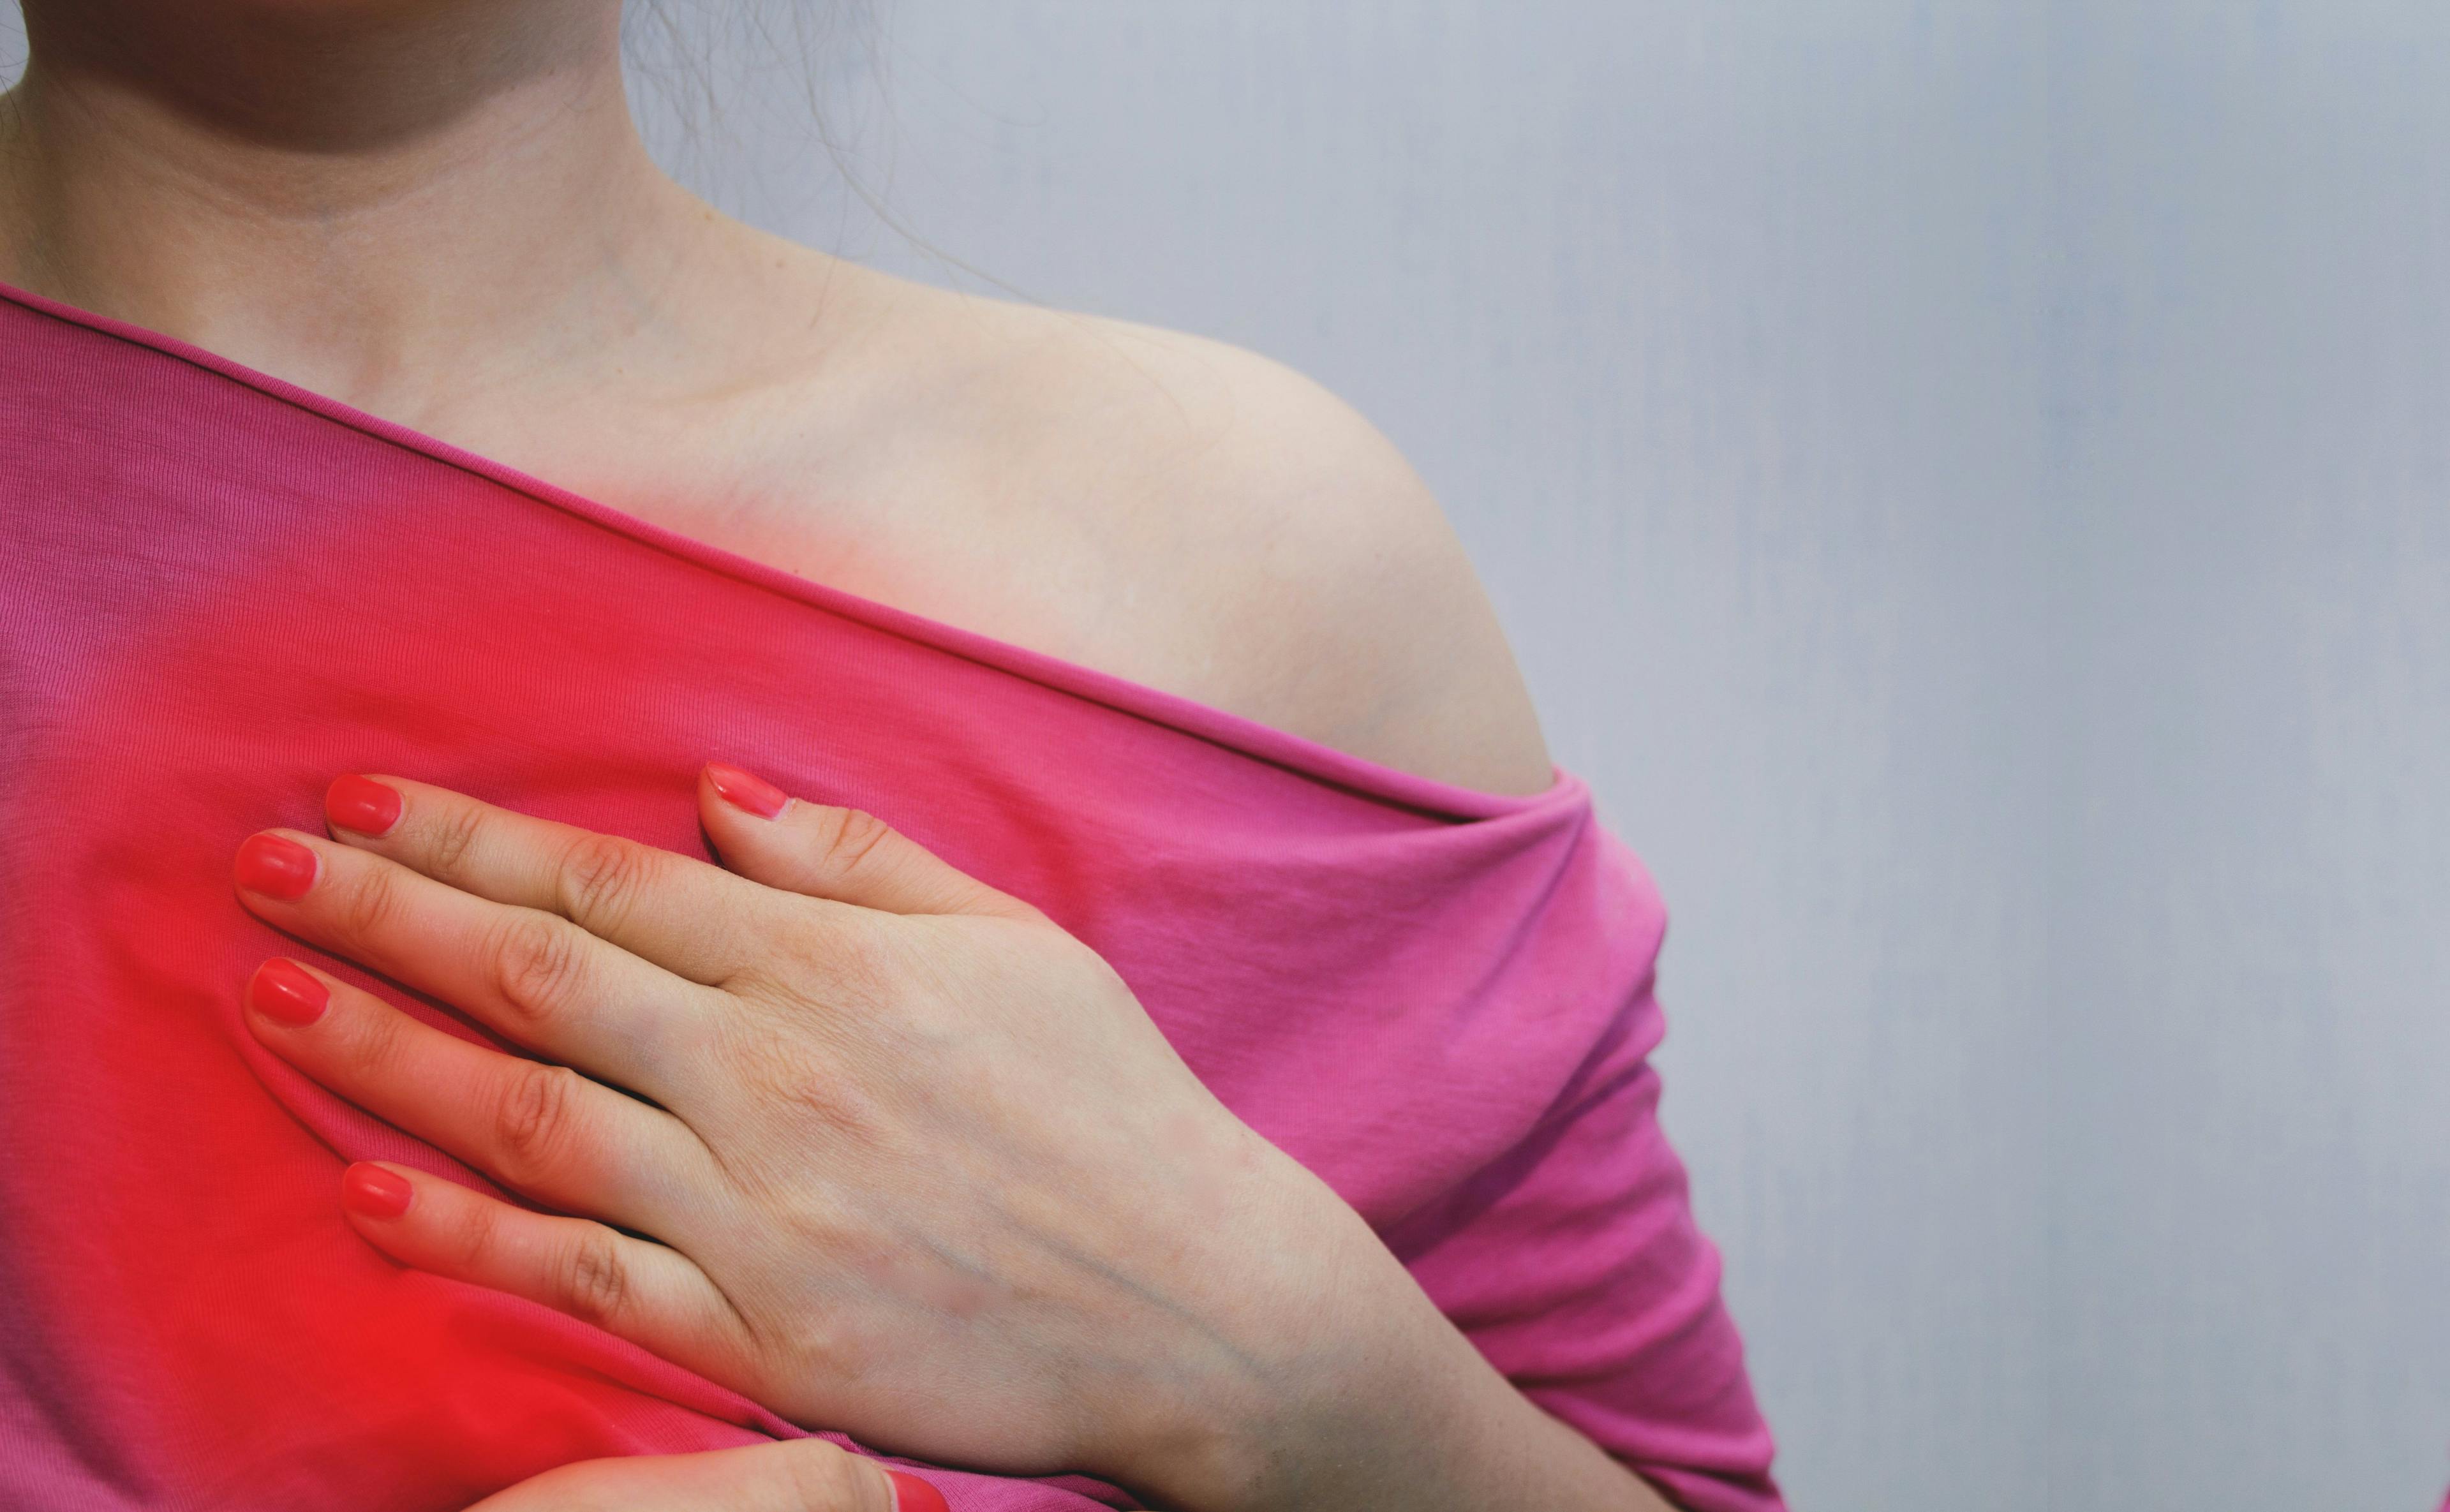 Heart Attacks Misdiagnosed More Often in Women Than Men